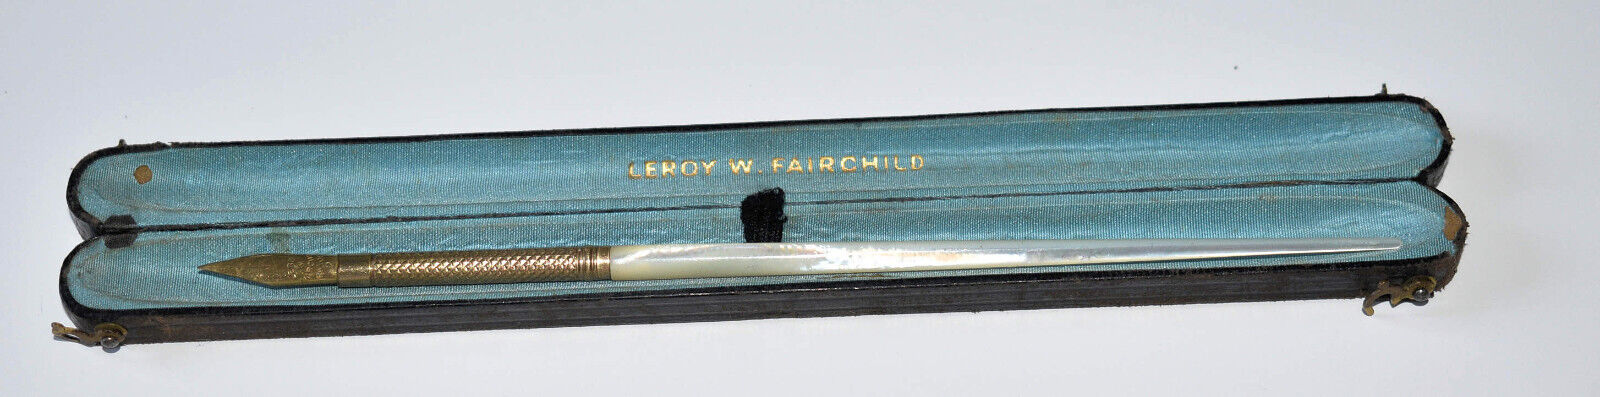 Antique Fairchild 9 Gold & Mother of Pearl Dip Pen~Full Flex Nib #2~OriginalCase